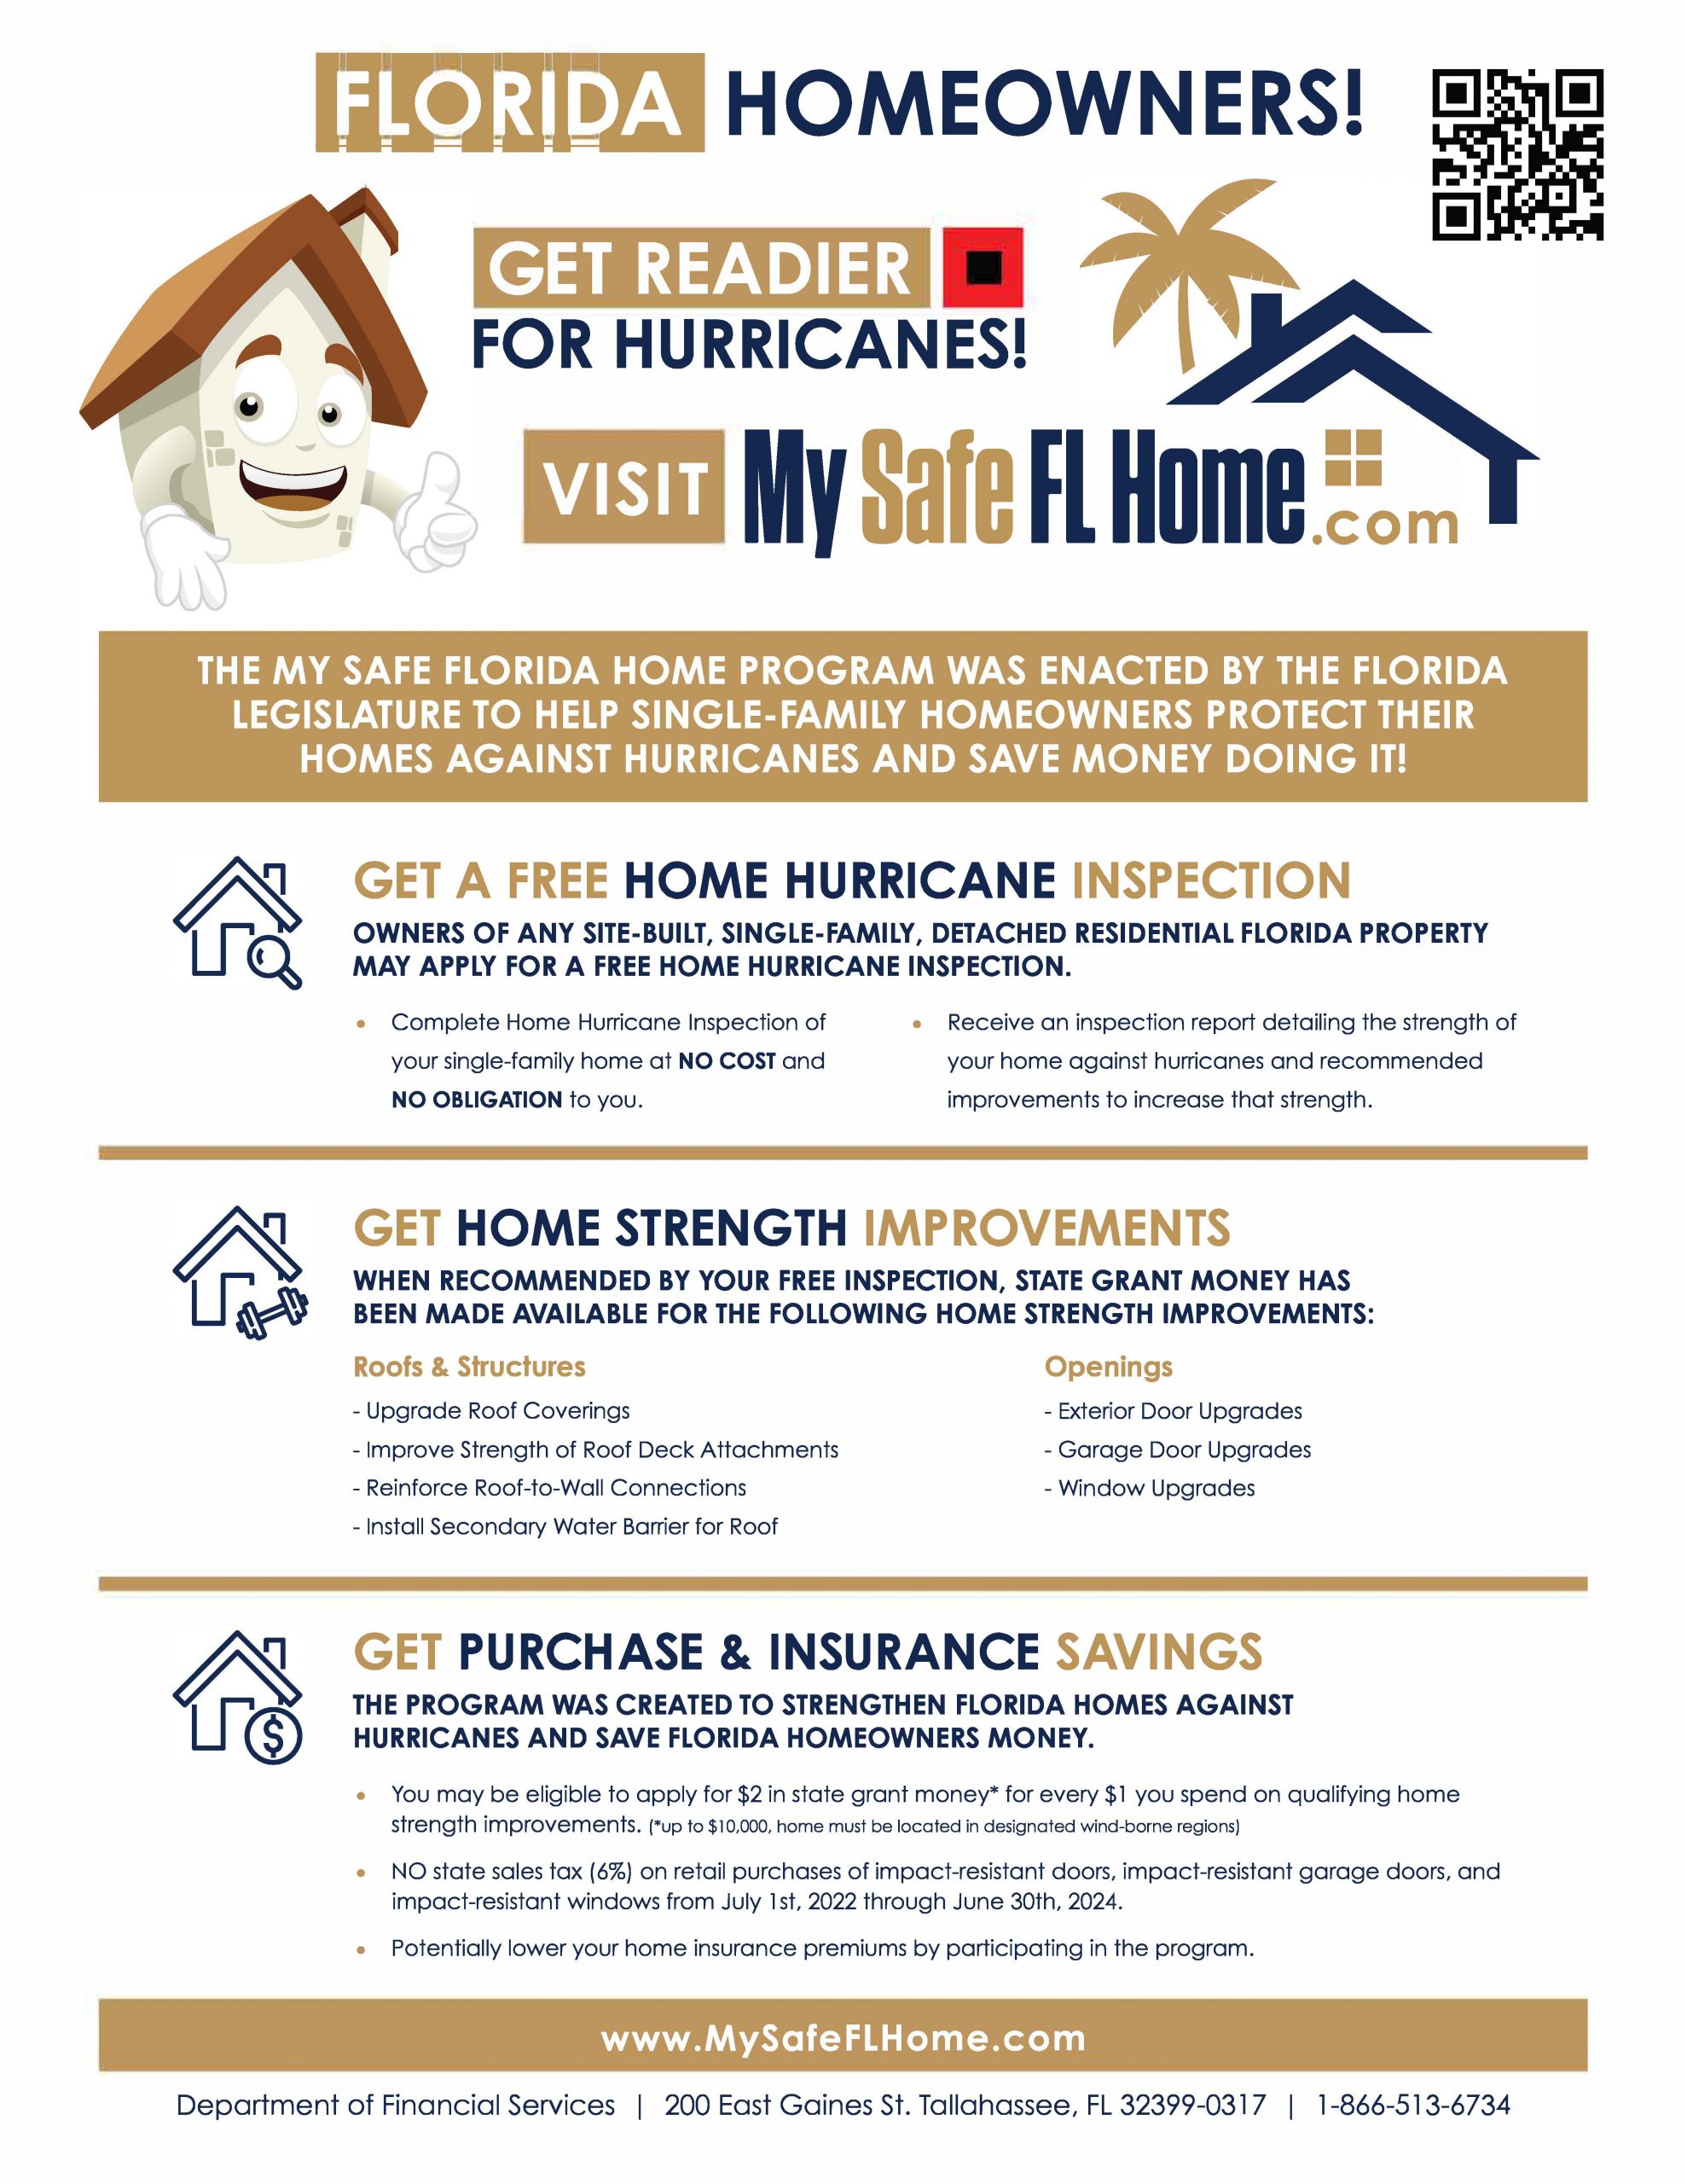 Understanding Florida's My Safe Florida Home program